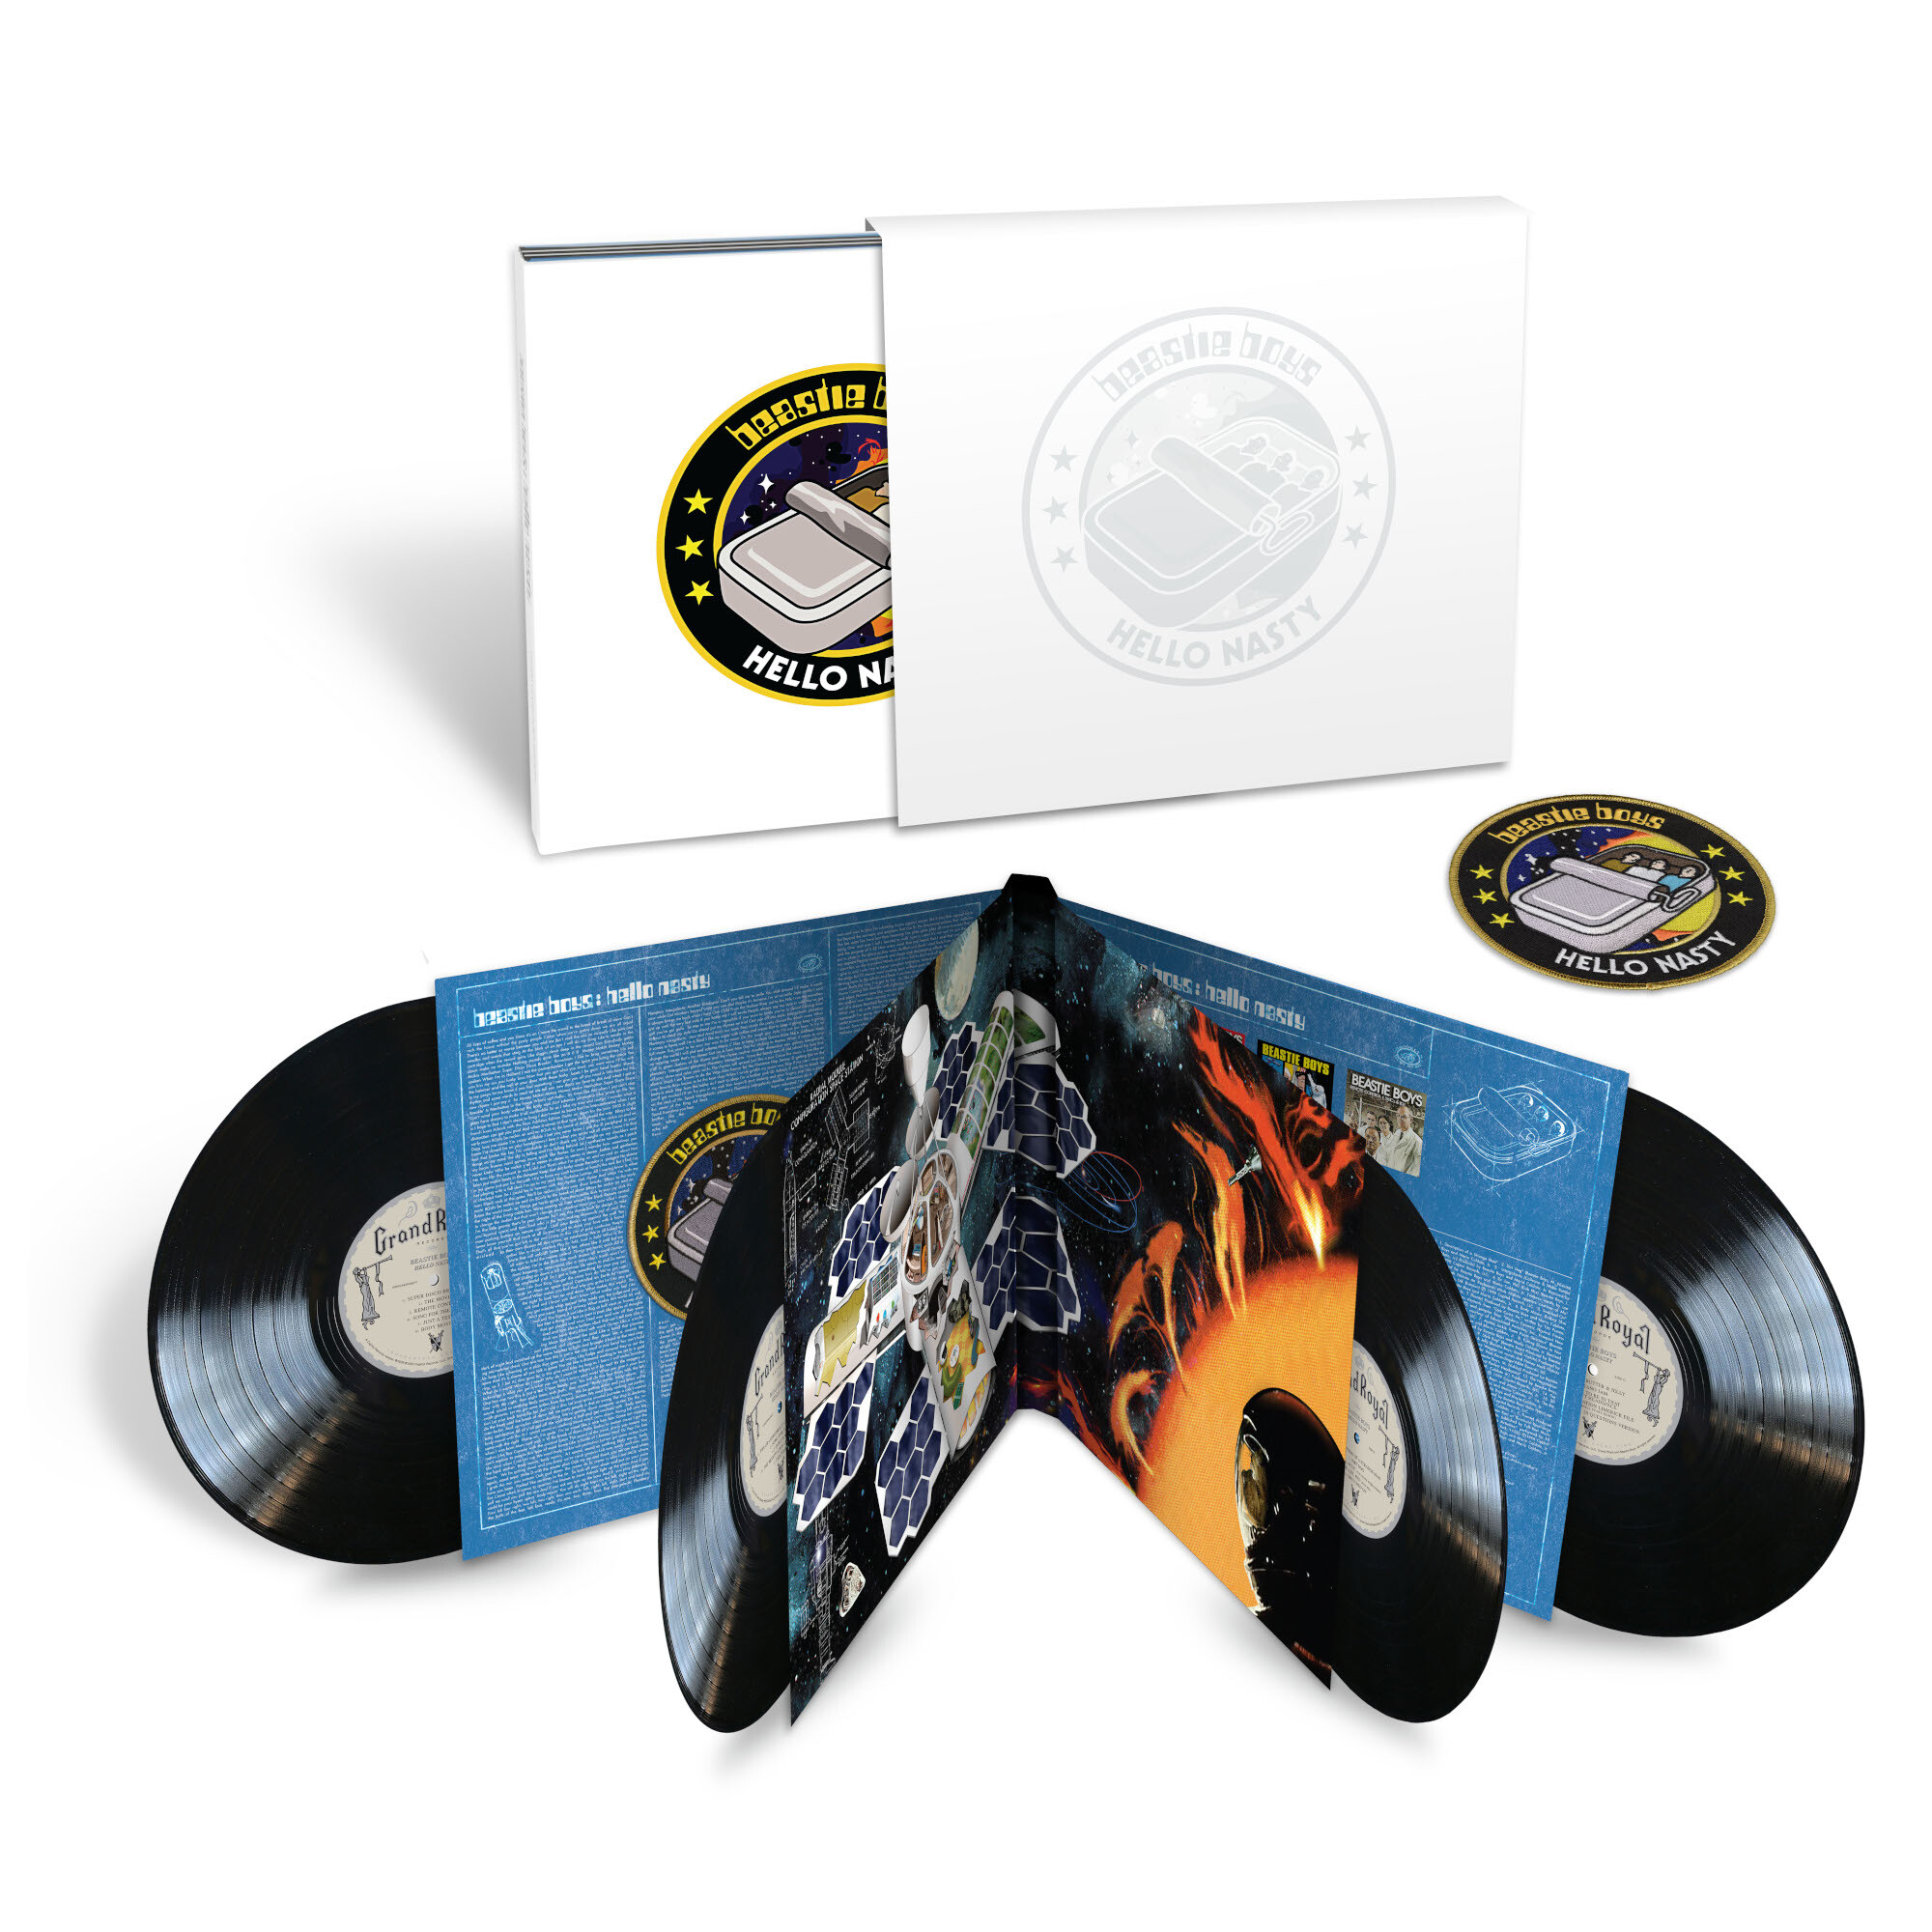 Mac Miller VERY RARE Vinyl Test Press Circles Double LP